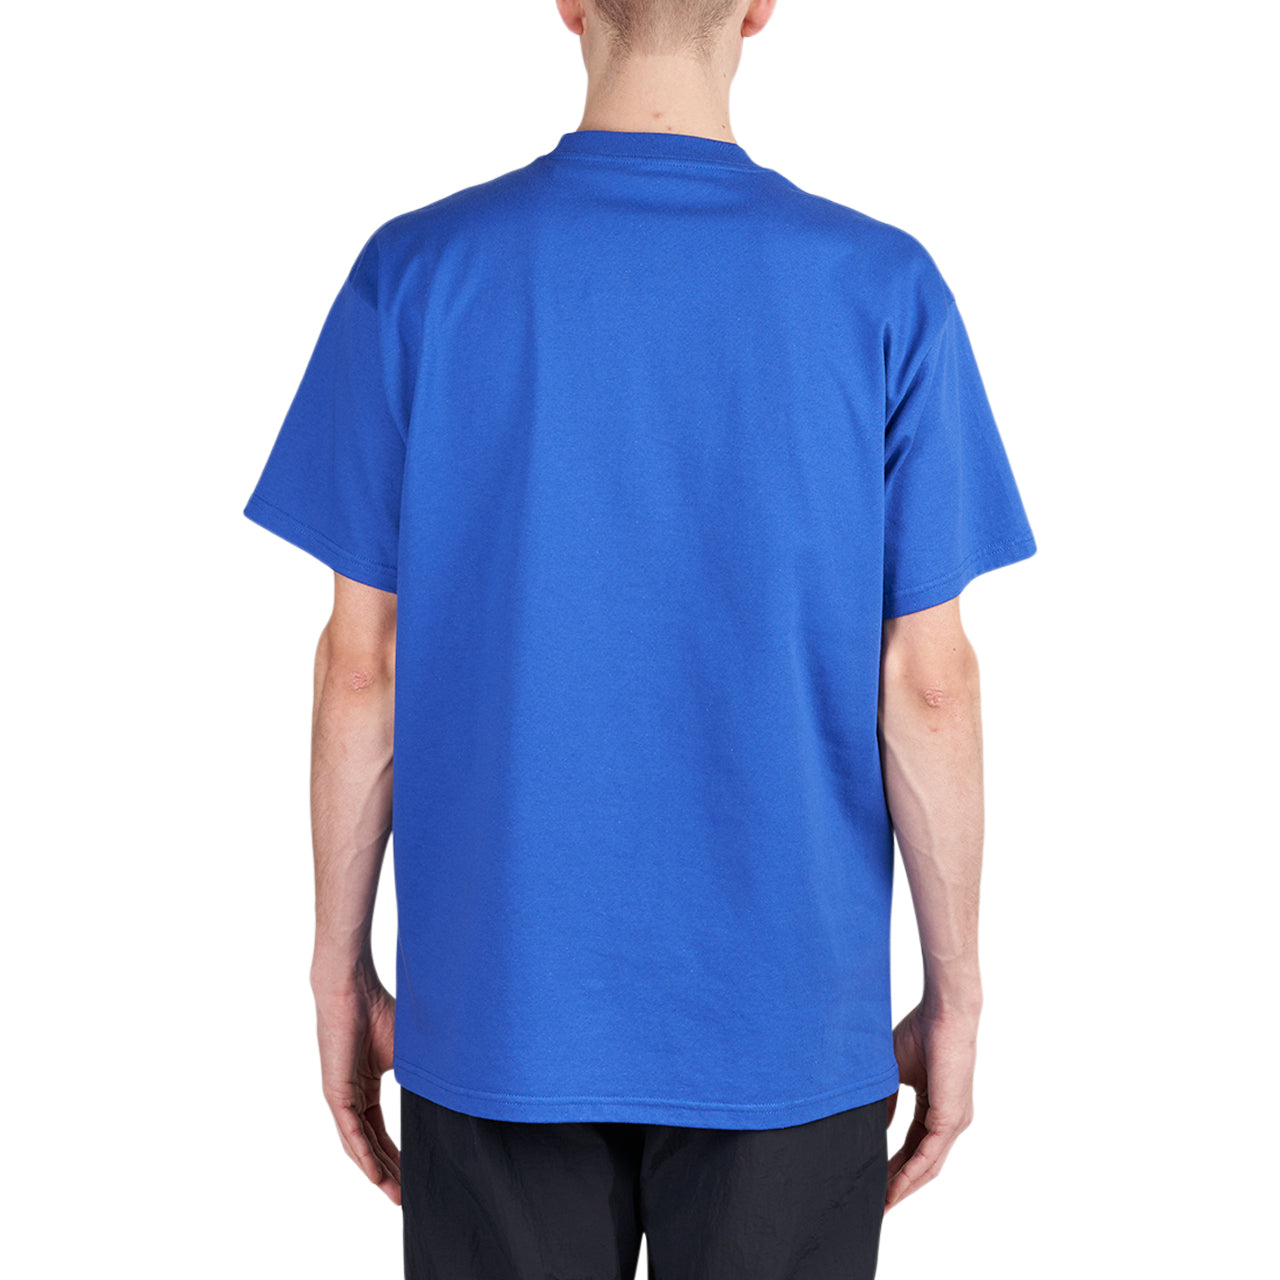 Carhartt WIP S/S Blush T-Shirt (Blau)  - Allike Store